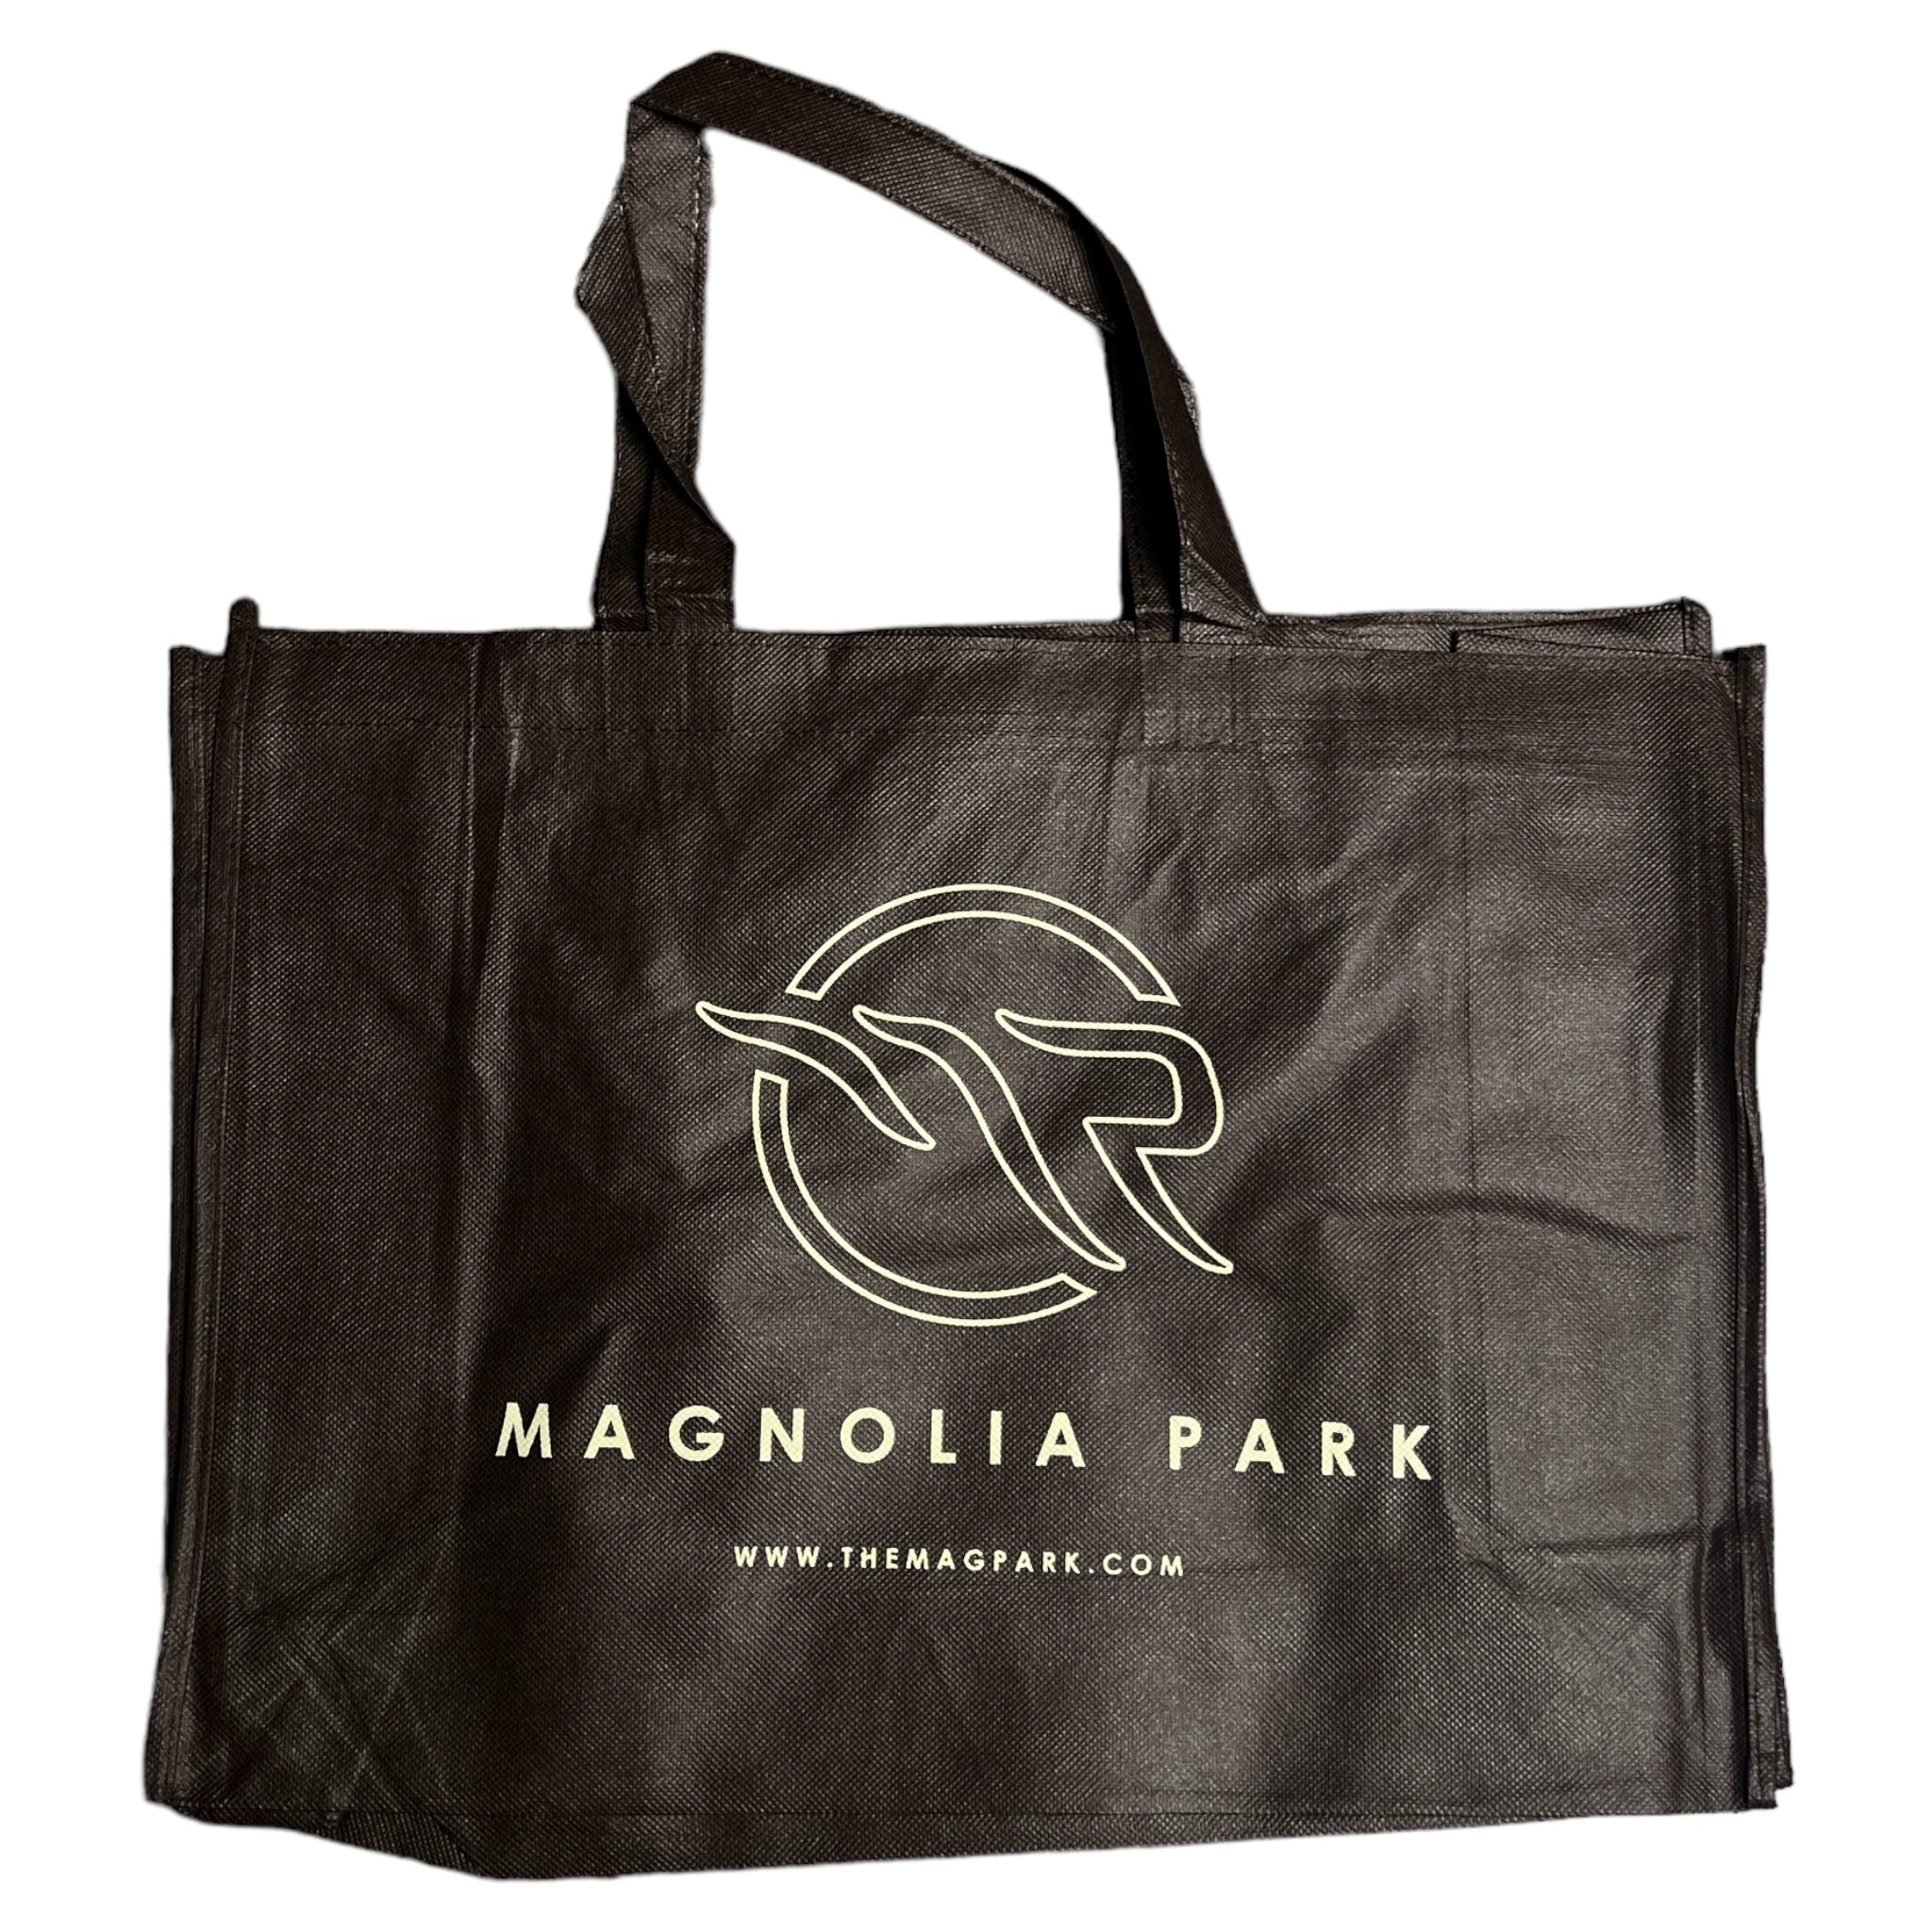 The Magnolia Park Double Tote Bag